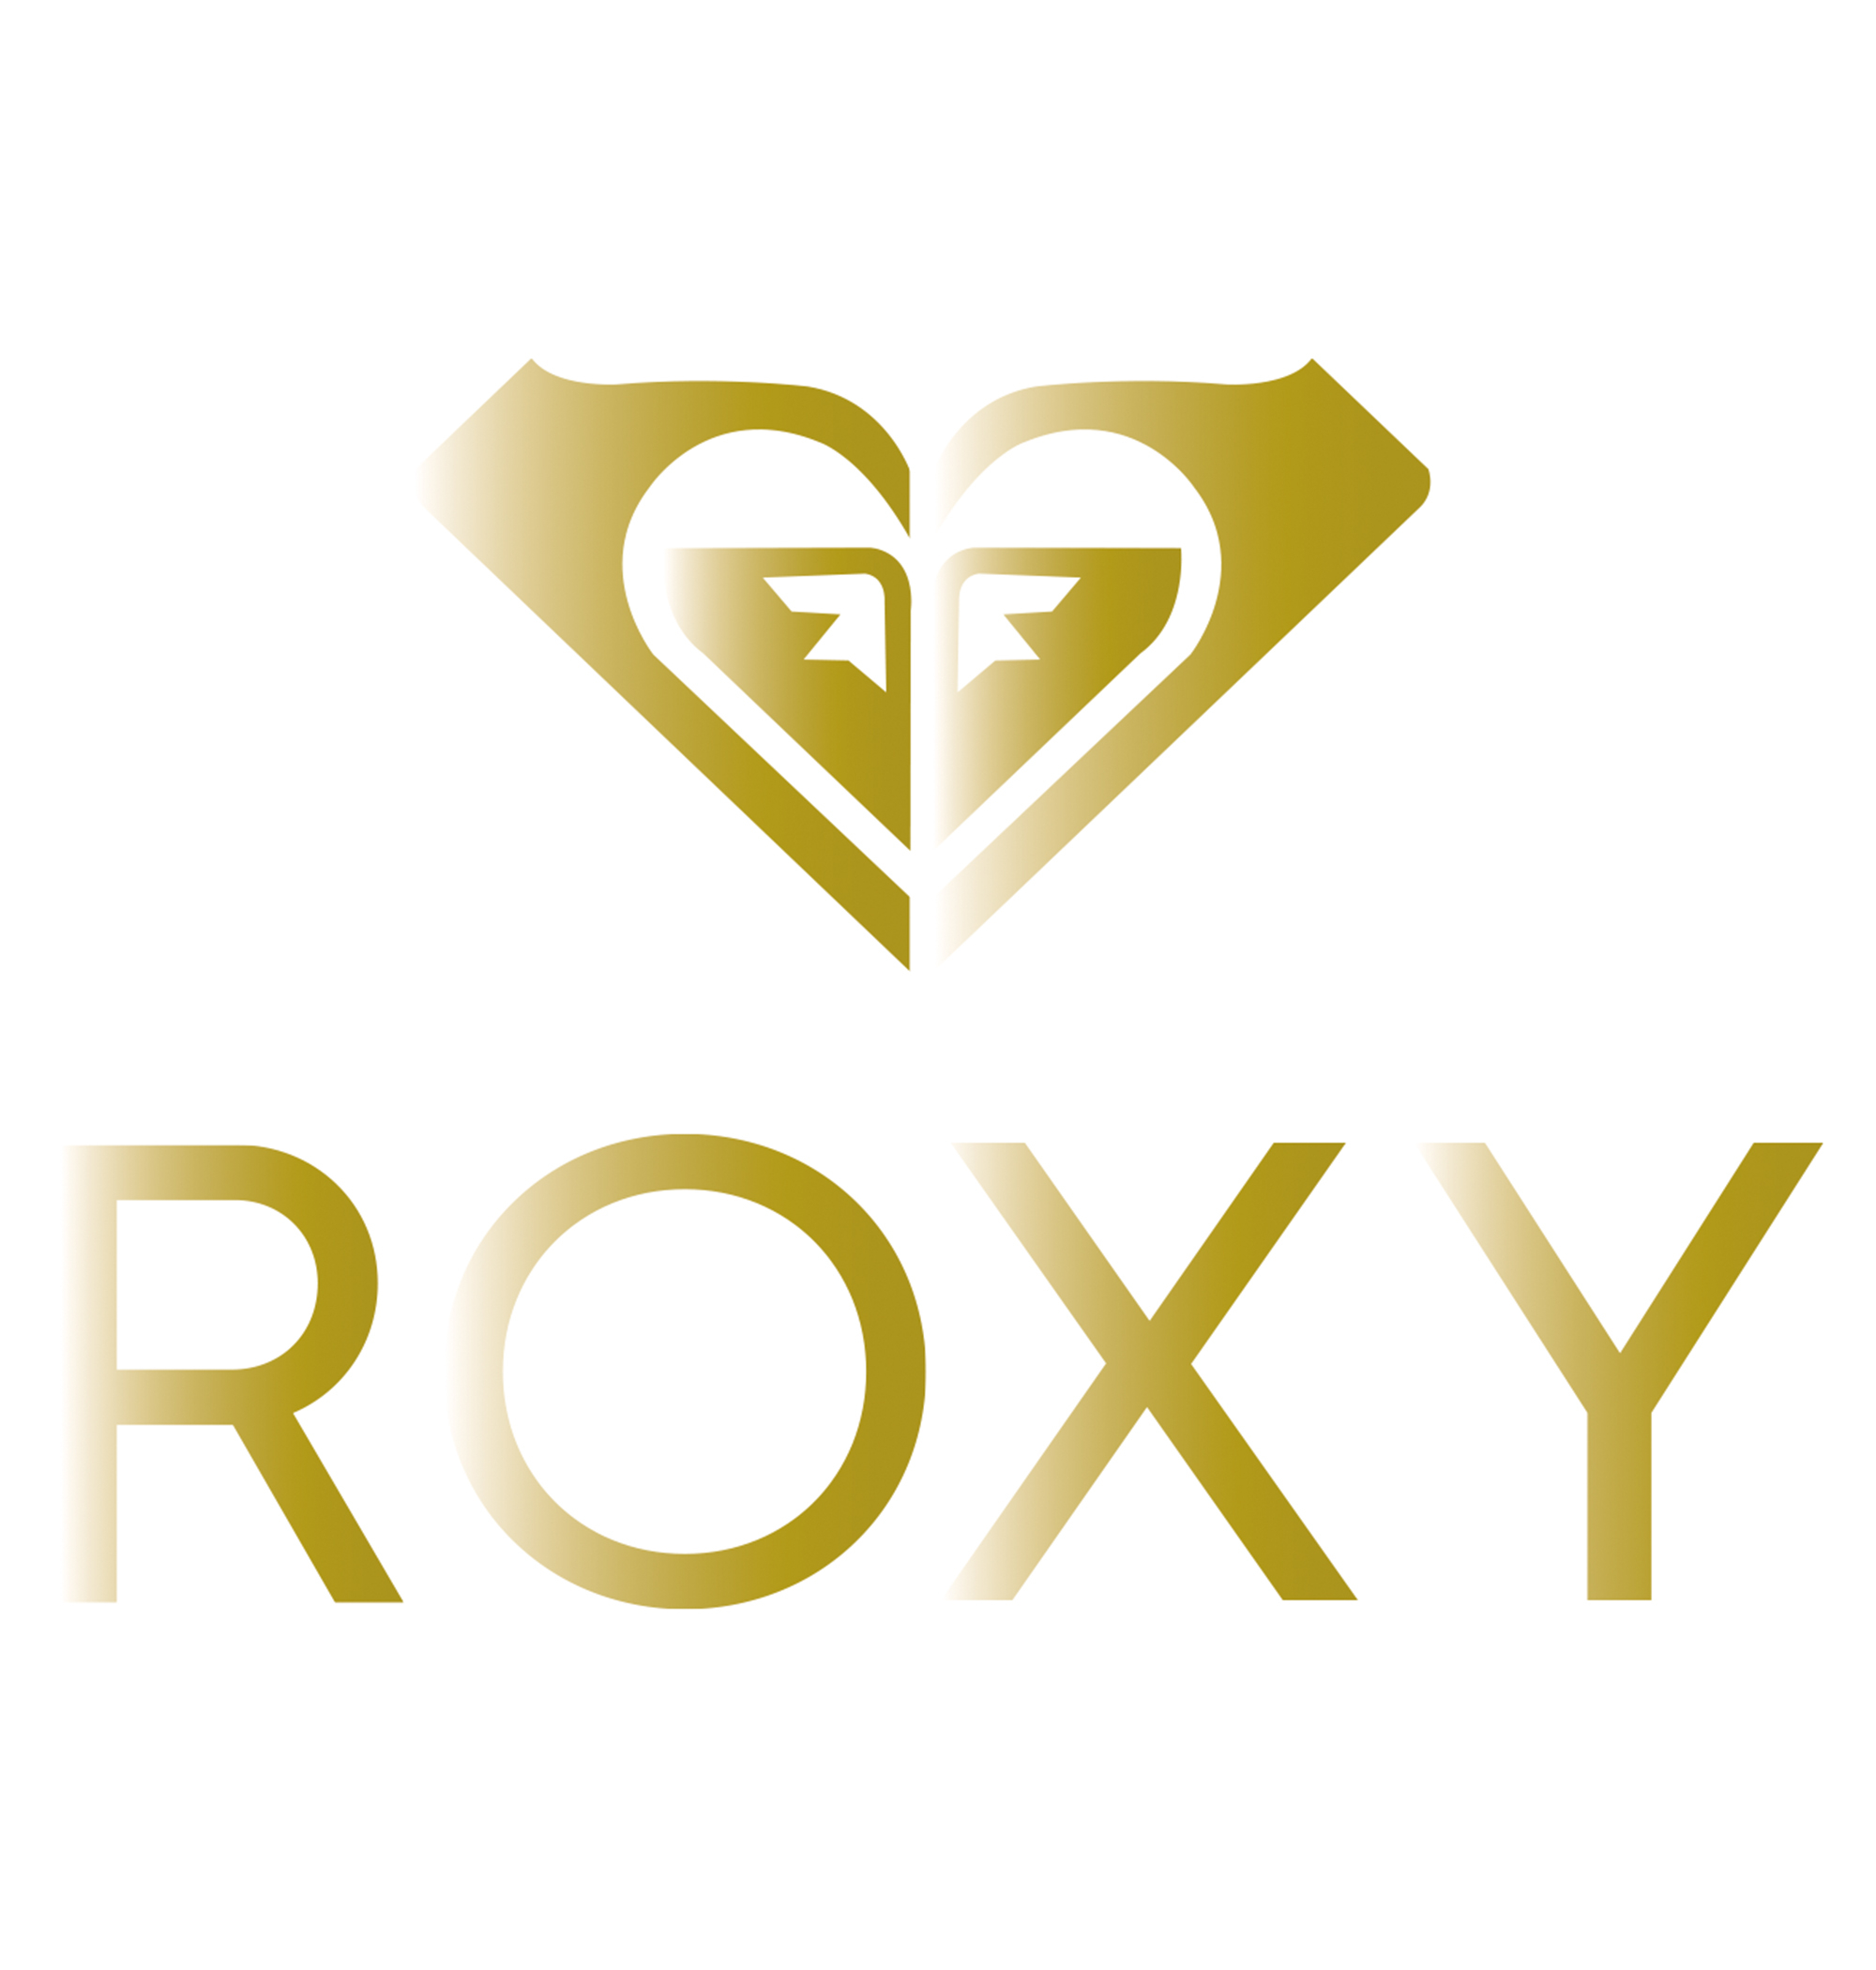 ROXY-A アクティブなROXYファンの目印になるブランドロゴステッカー